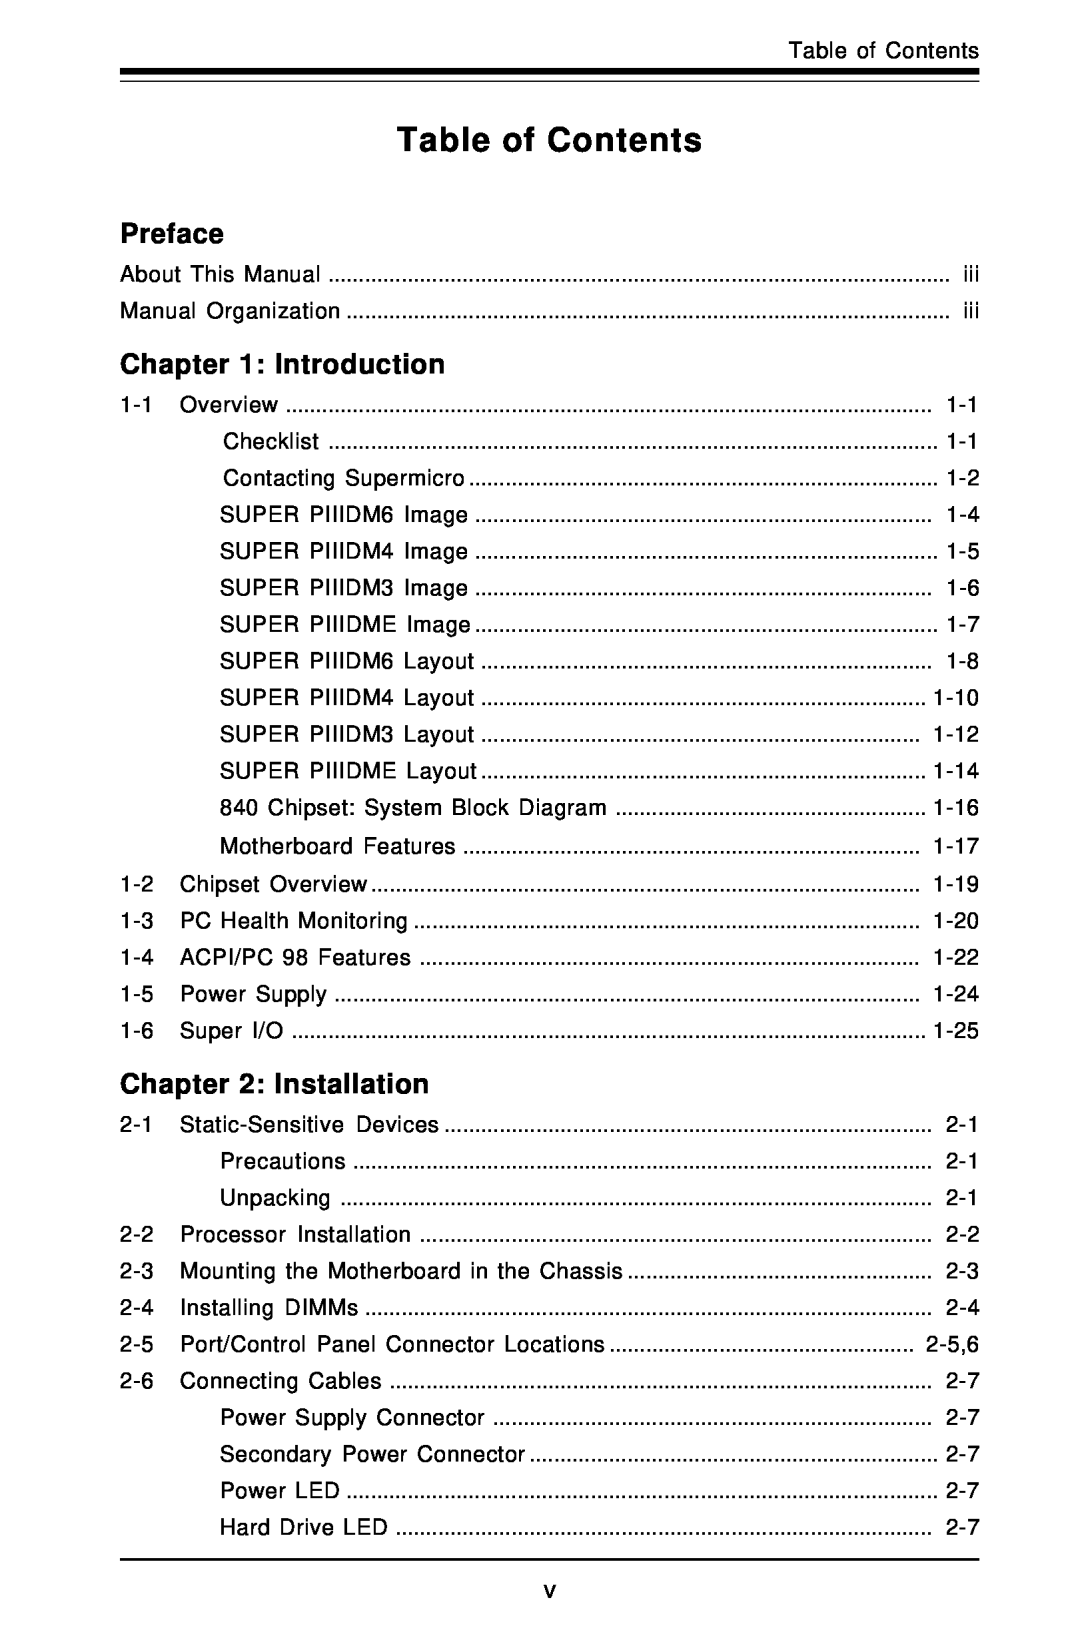 SUPER MICRO Computer Super PIIIDME, Super PIIIDM3, Super PIIIDM6 Table of Contents, Preface, Introduction, Installation 